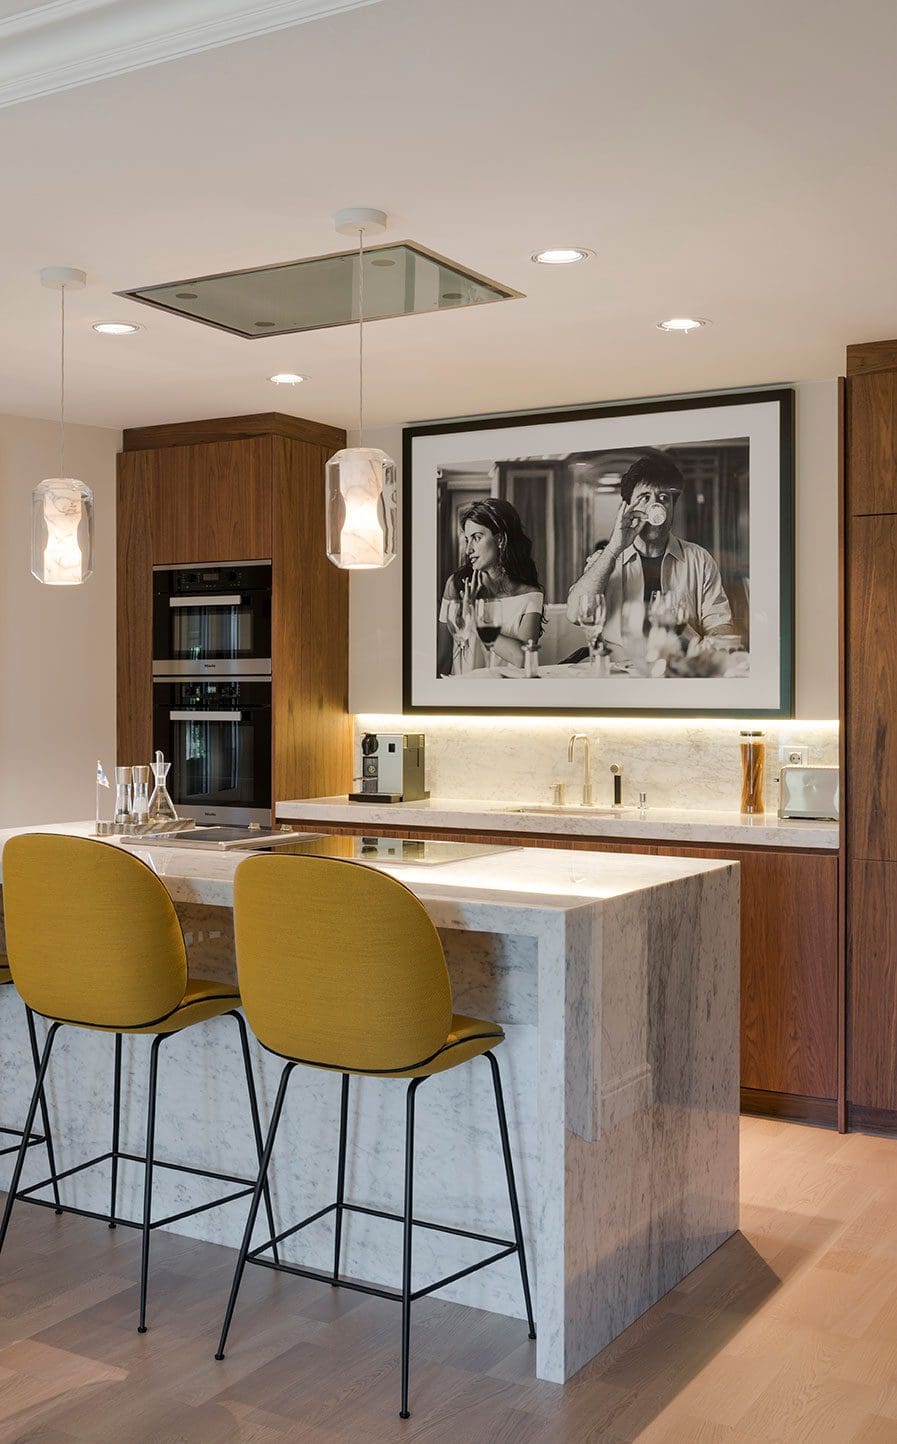 RecDi8 Living Interior Kitchen Design